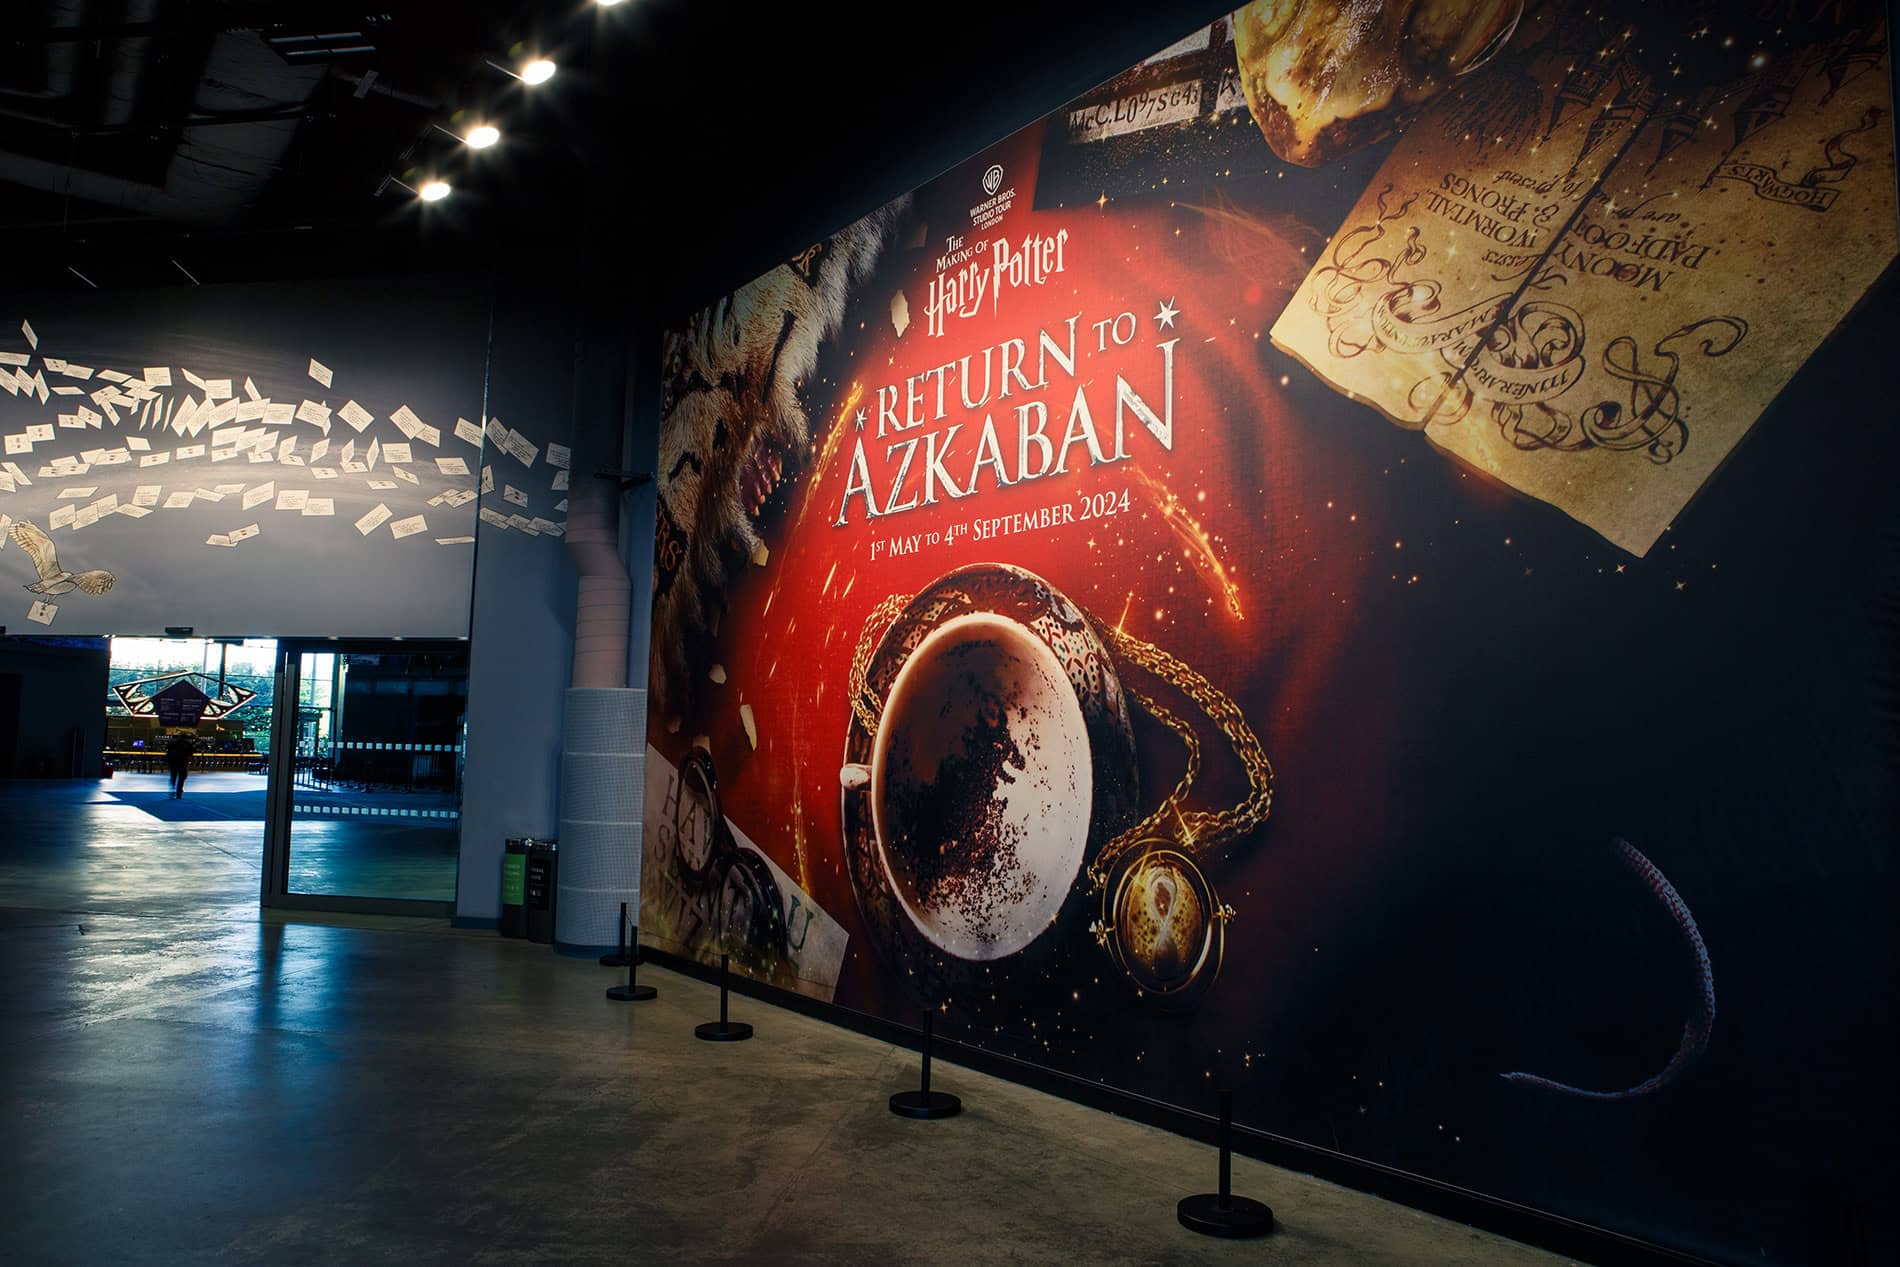 ‘Return to Azkaban’ exhibition opens at Warner Bros. Studio Tour to mark 20th anniversary